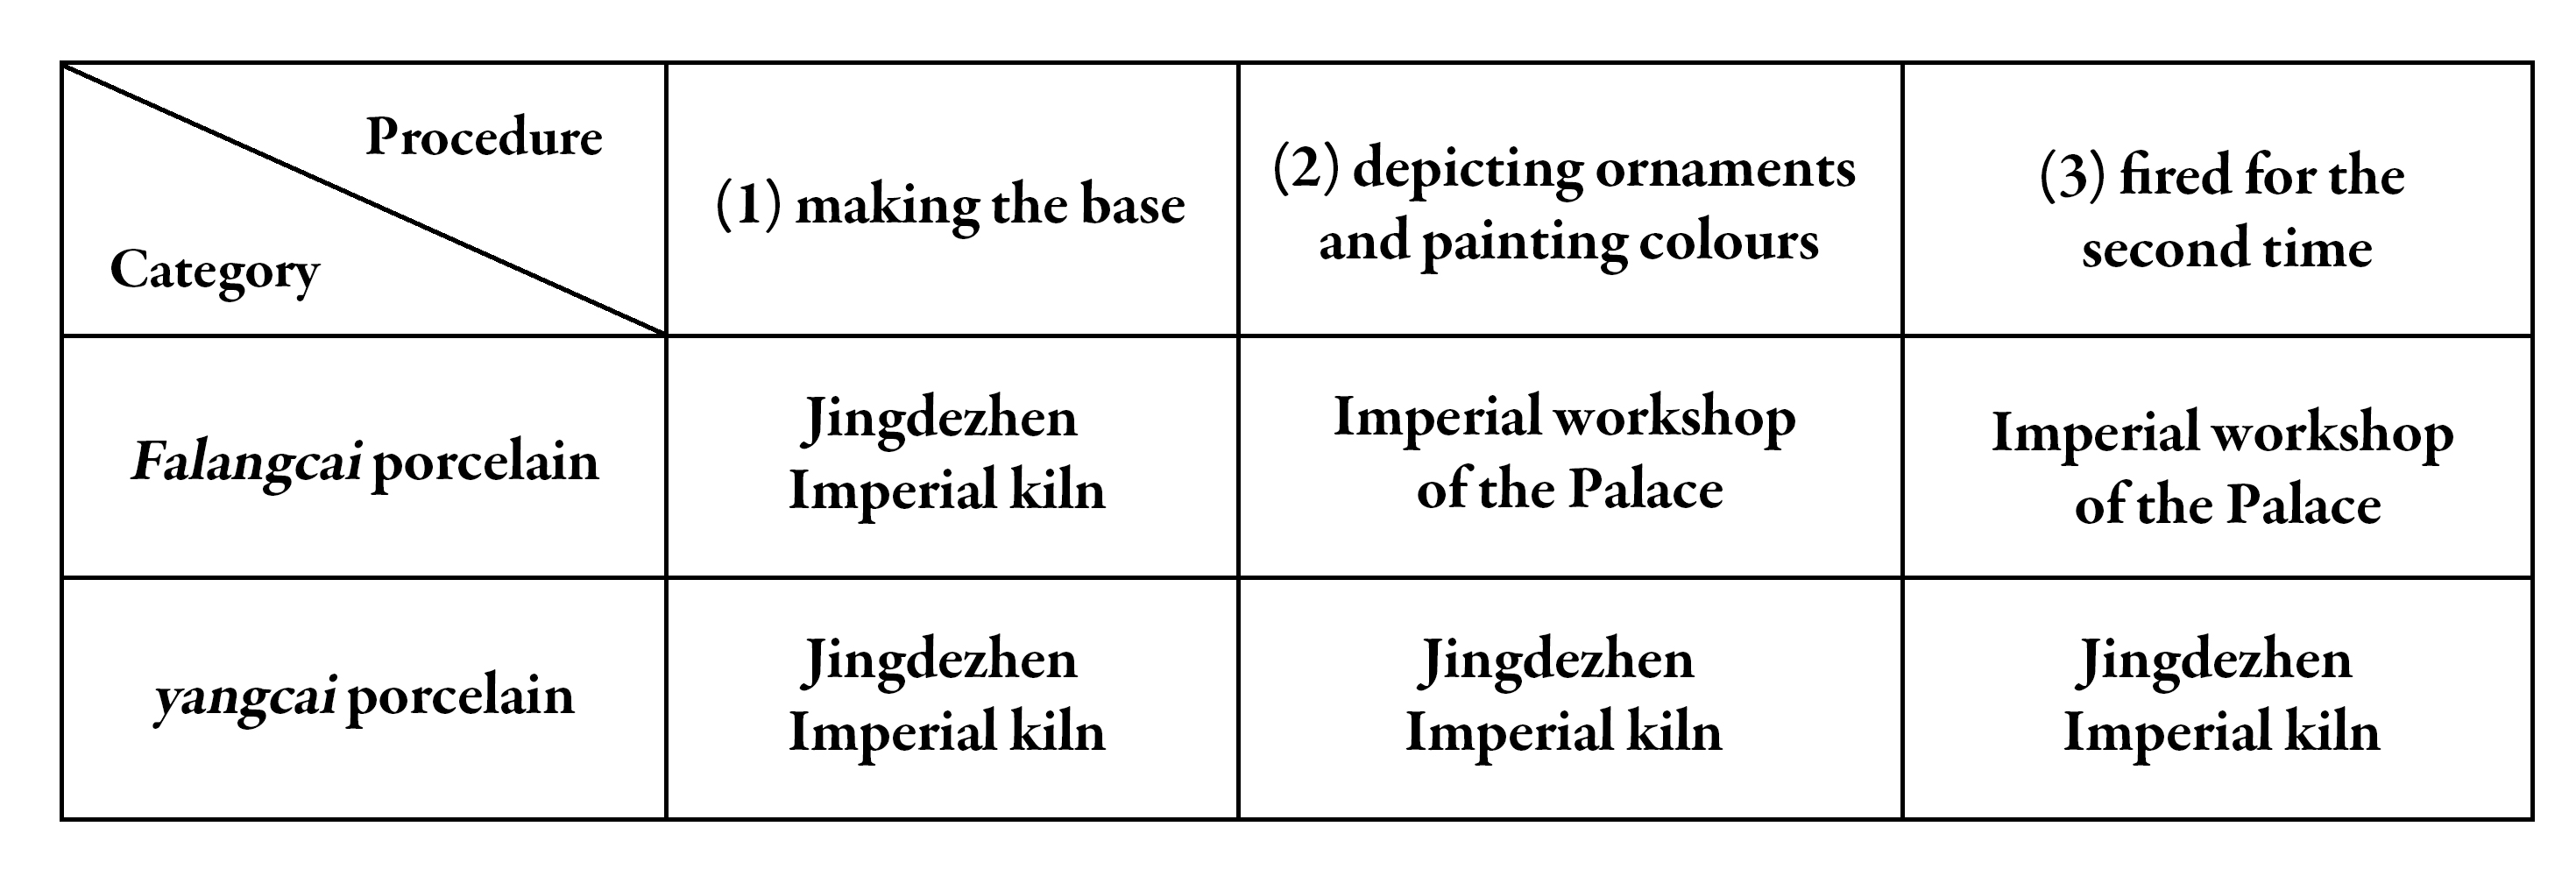 Where were the falangcai porcelain and yangcai porcelain produced?